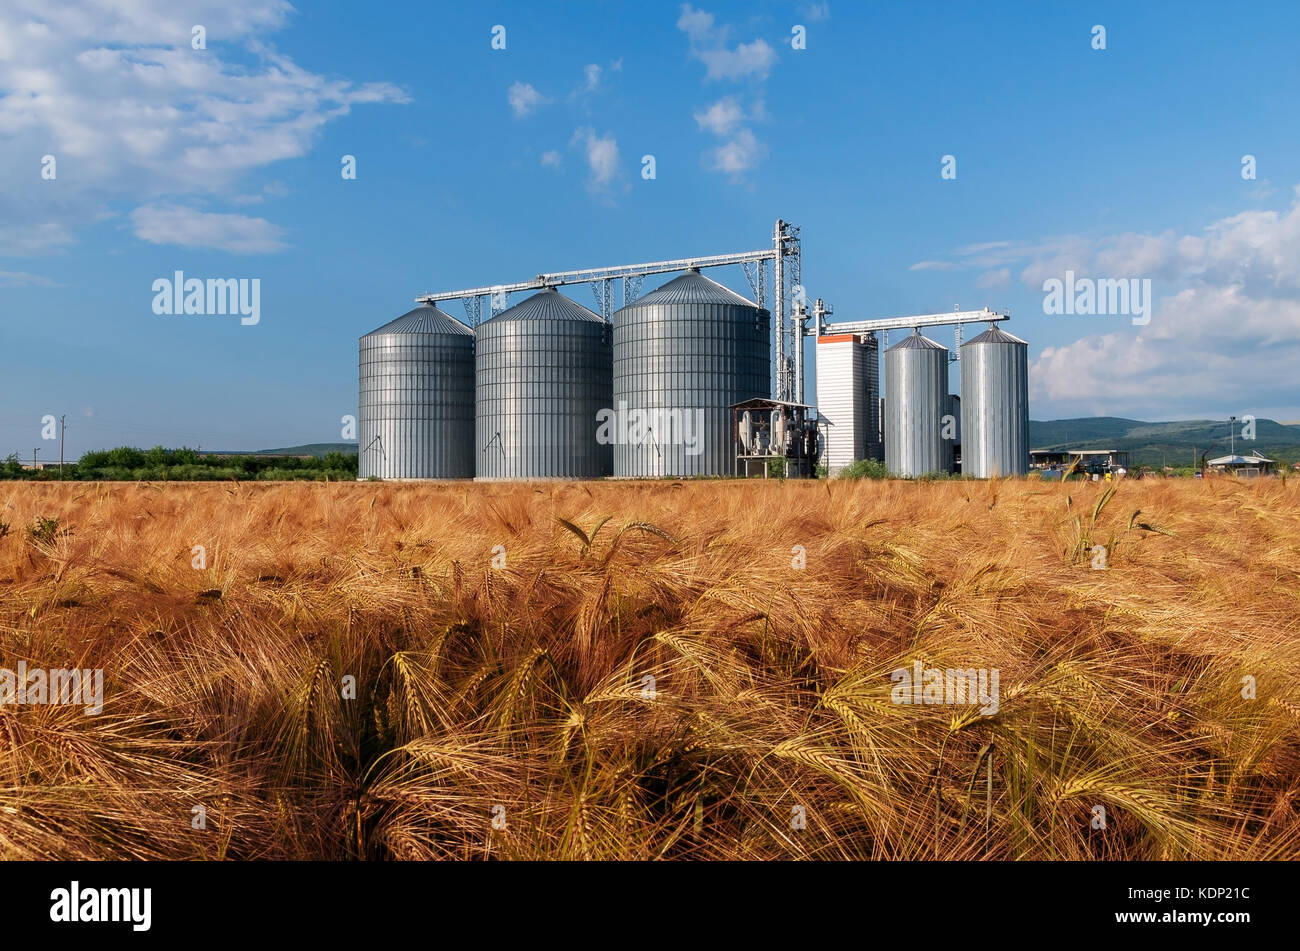 Farm, barley field with grain silos for agriculture Stock Photo